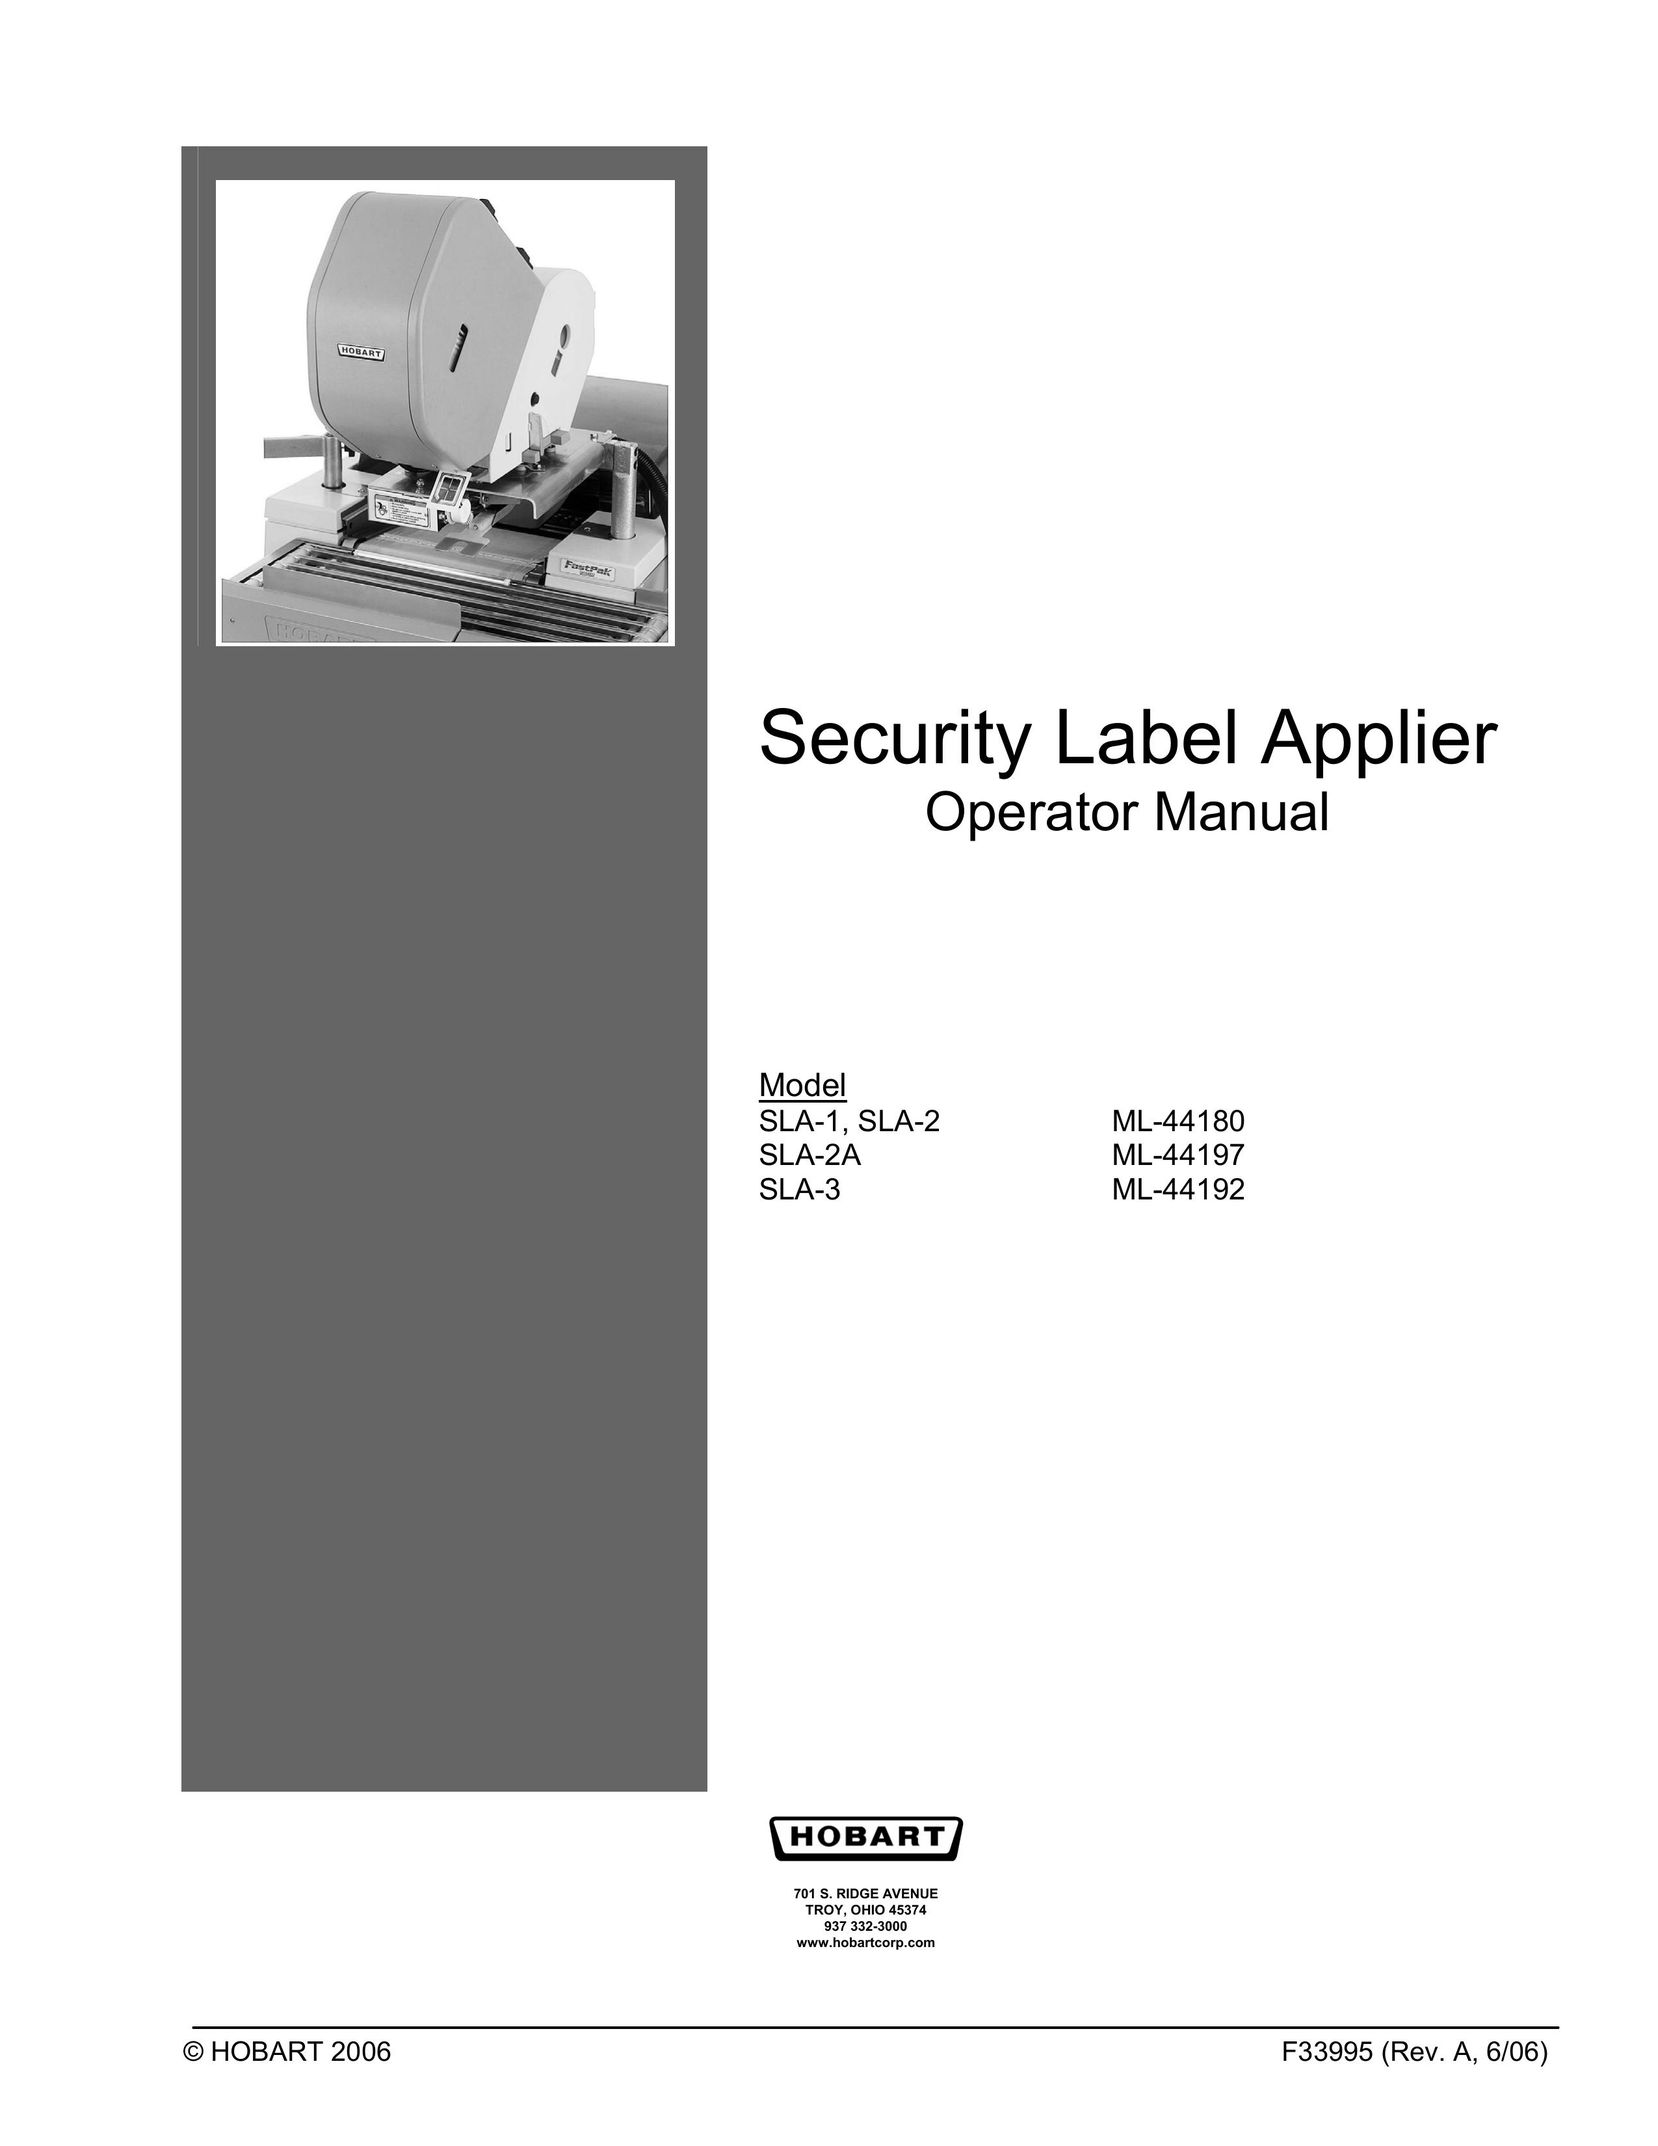 Hobart SLA-2A ML-44197 Label Maker User Manual